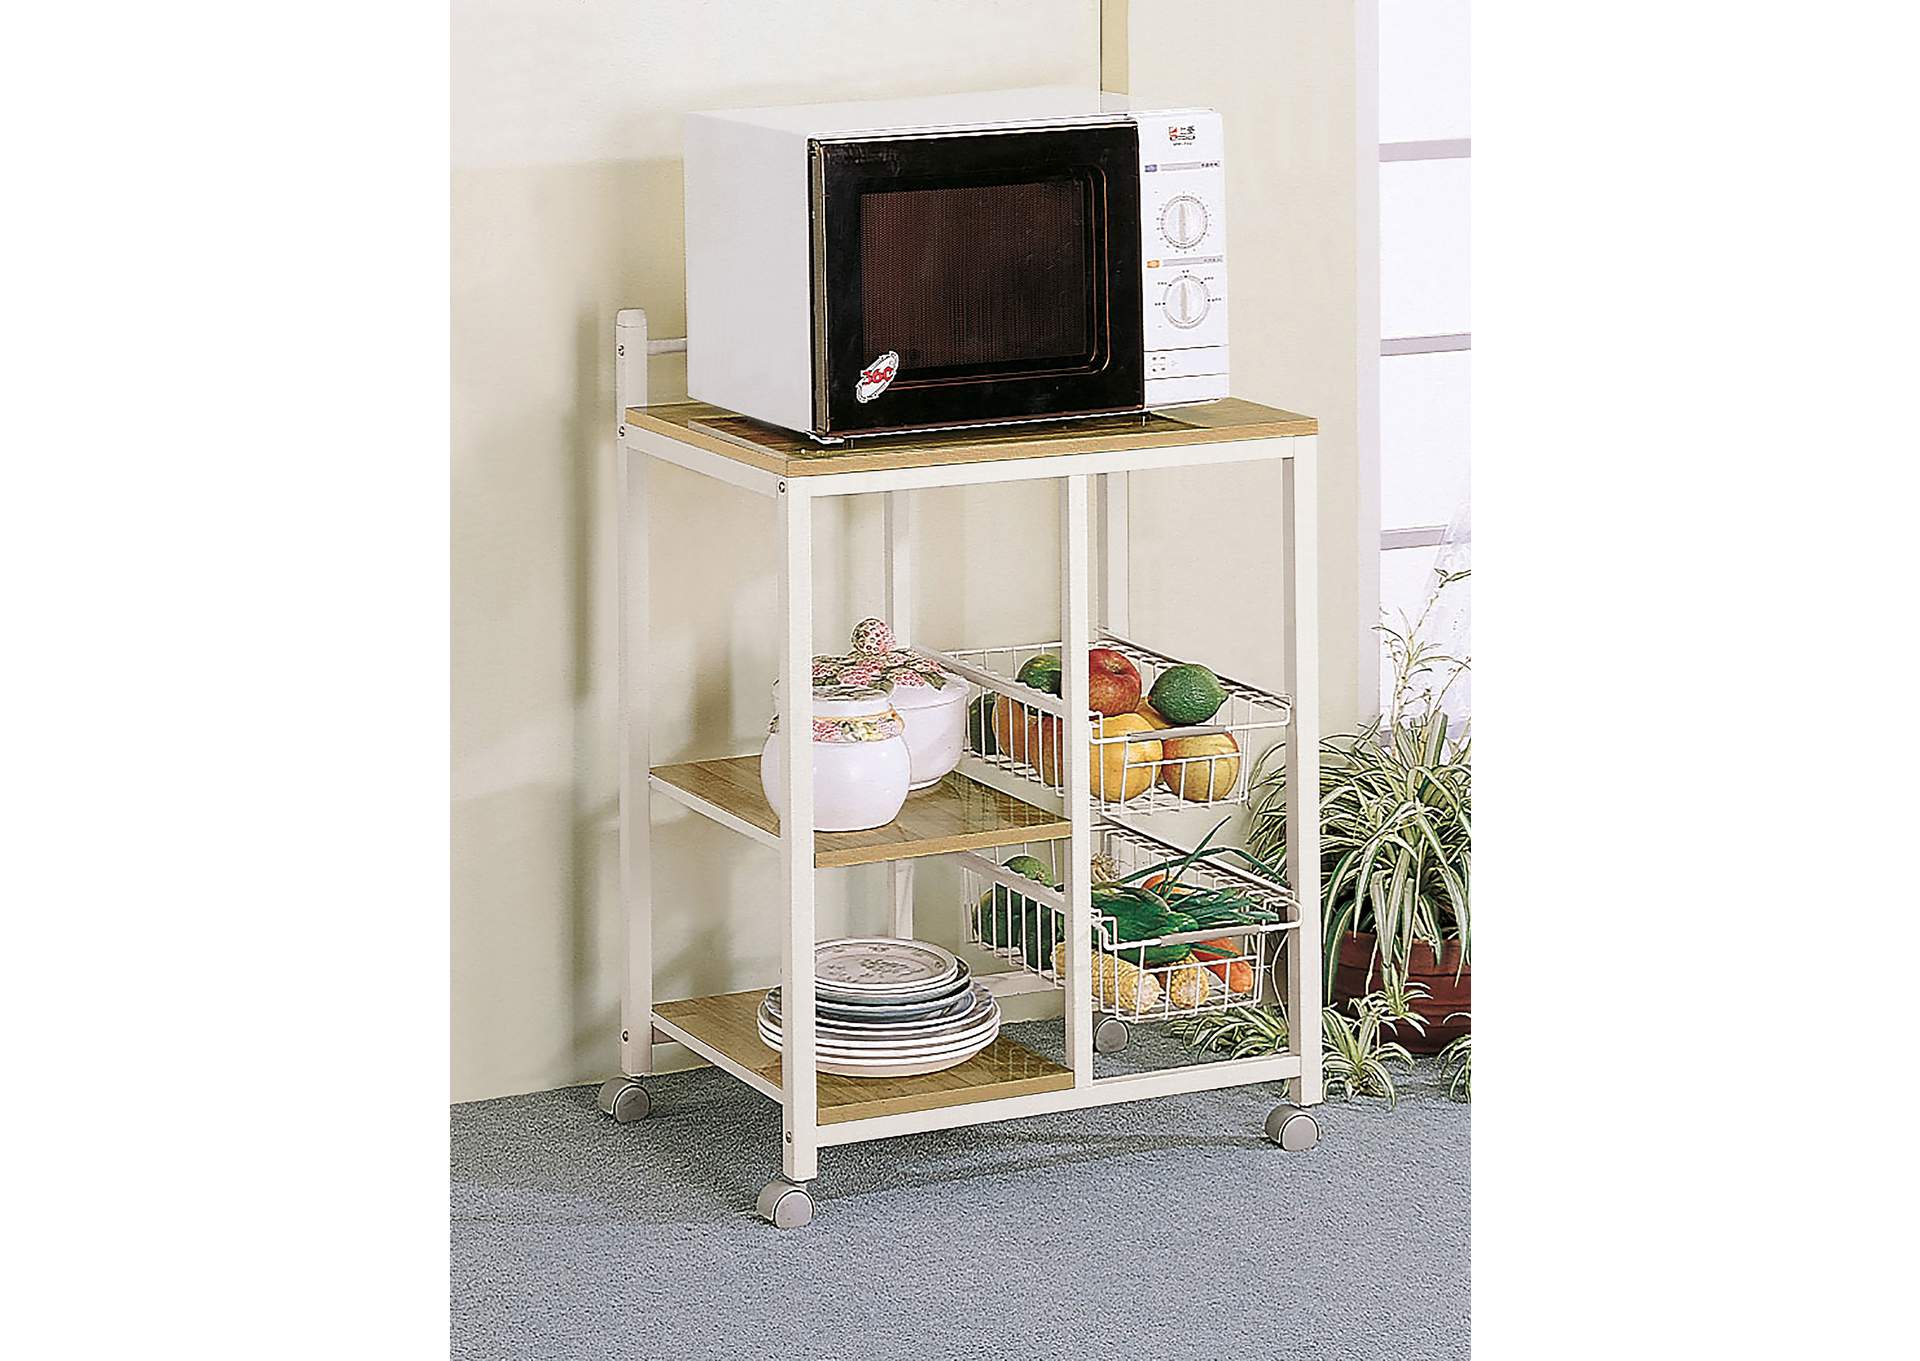 Kelvin 2-shelf Kitchen Cart Natural Brown and White,Coaster Furniture